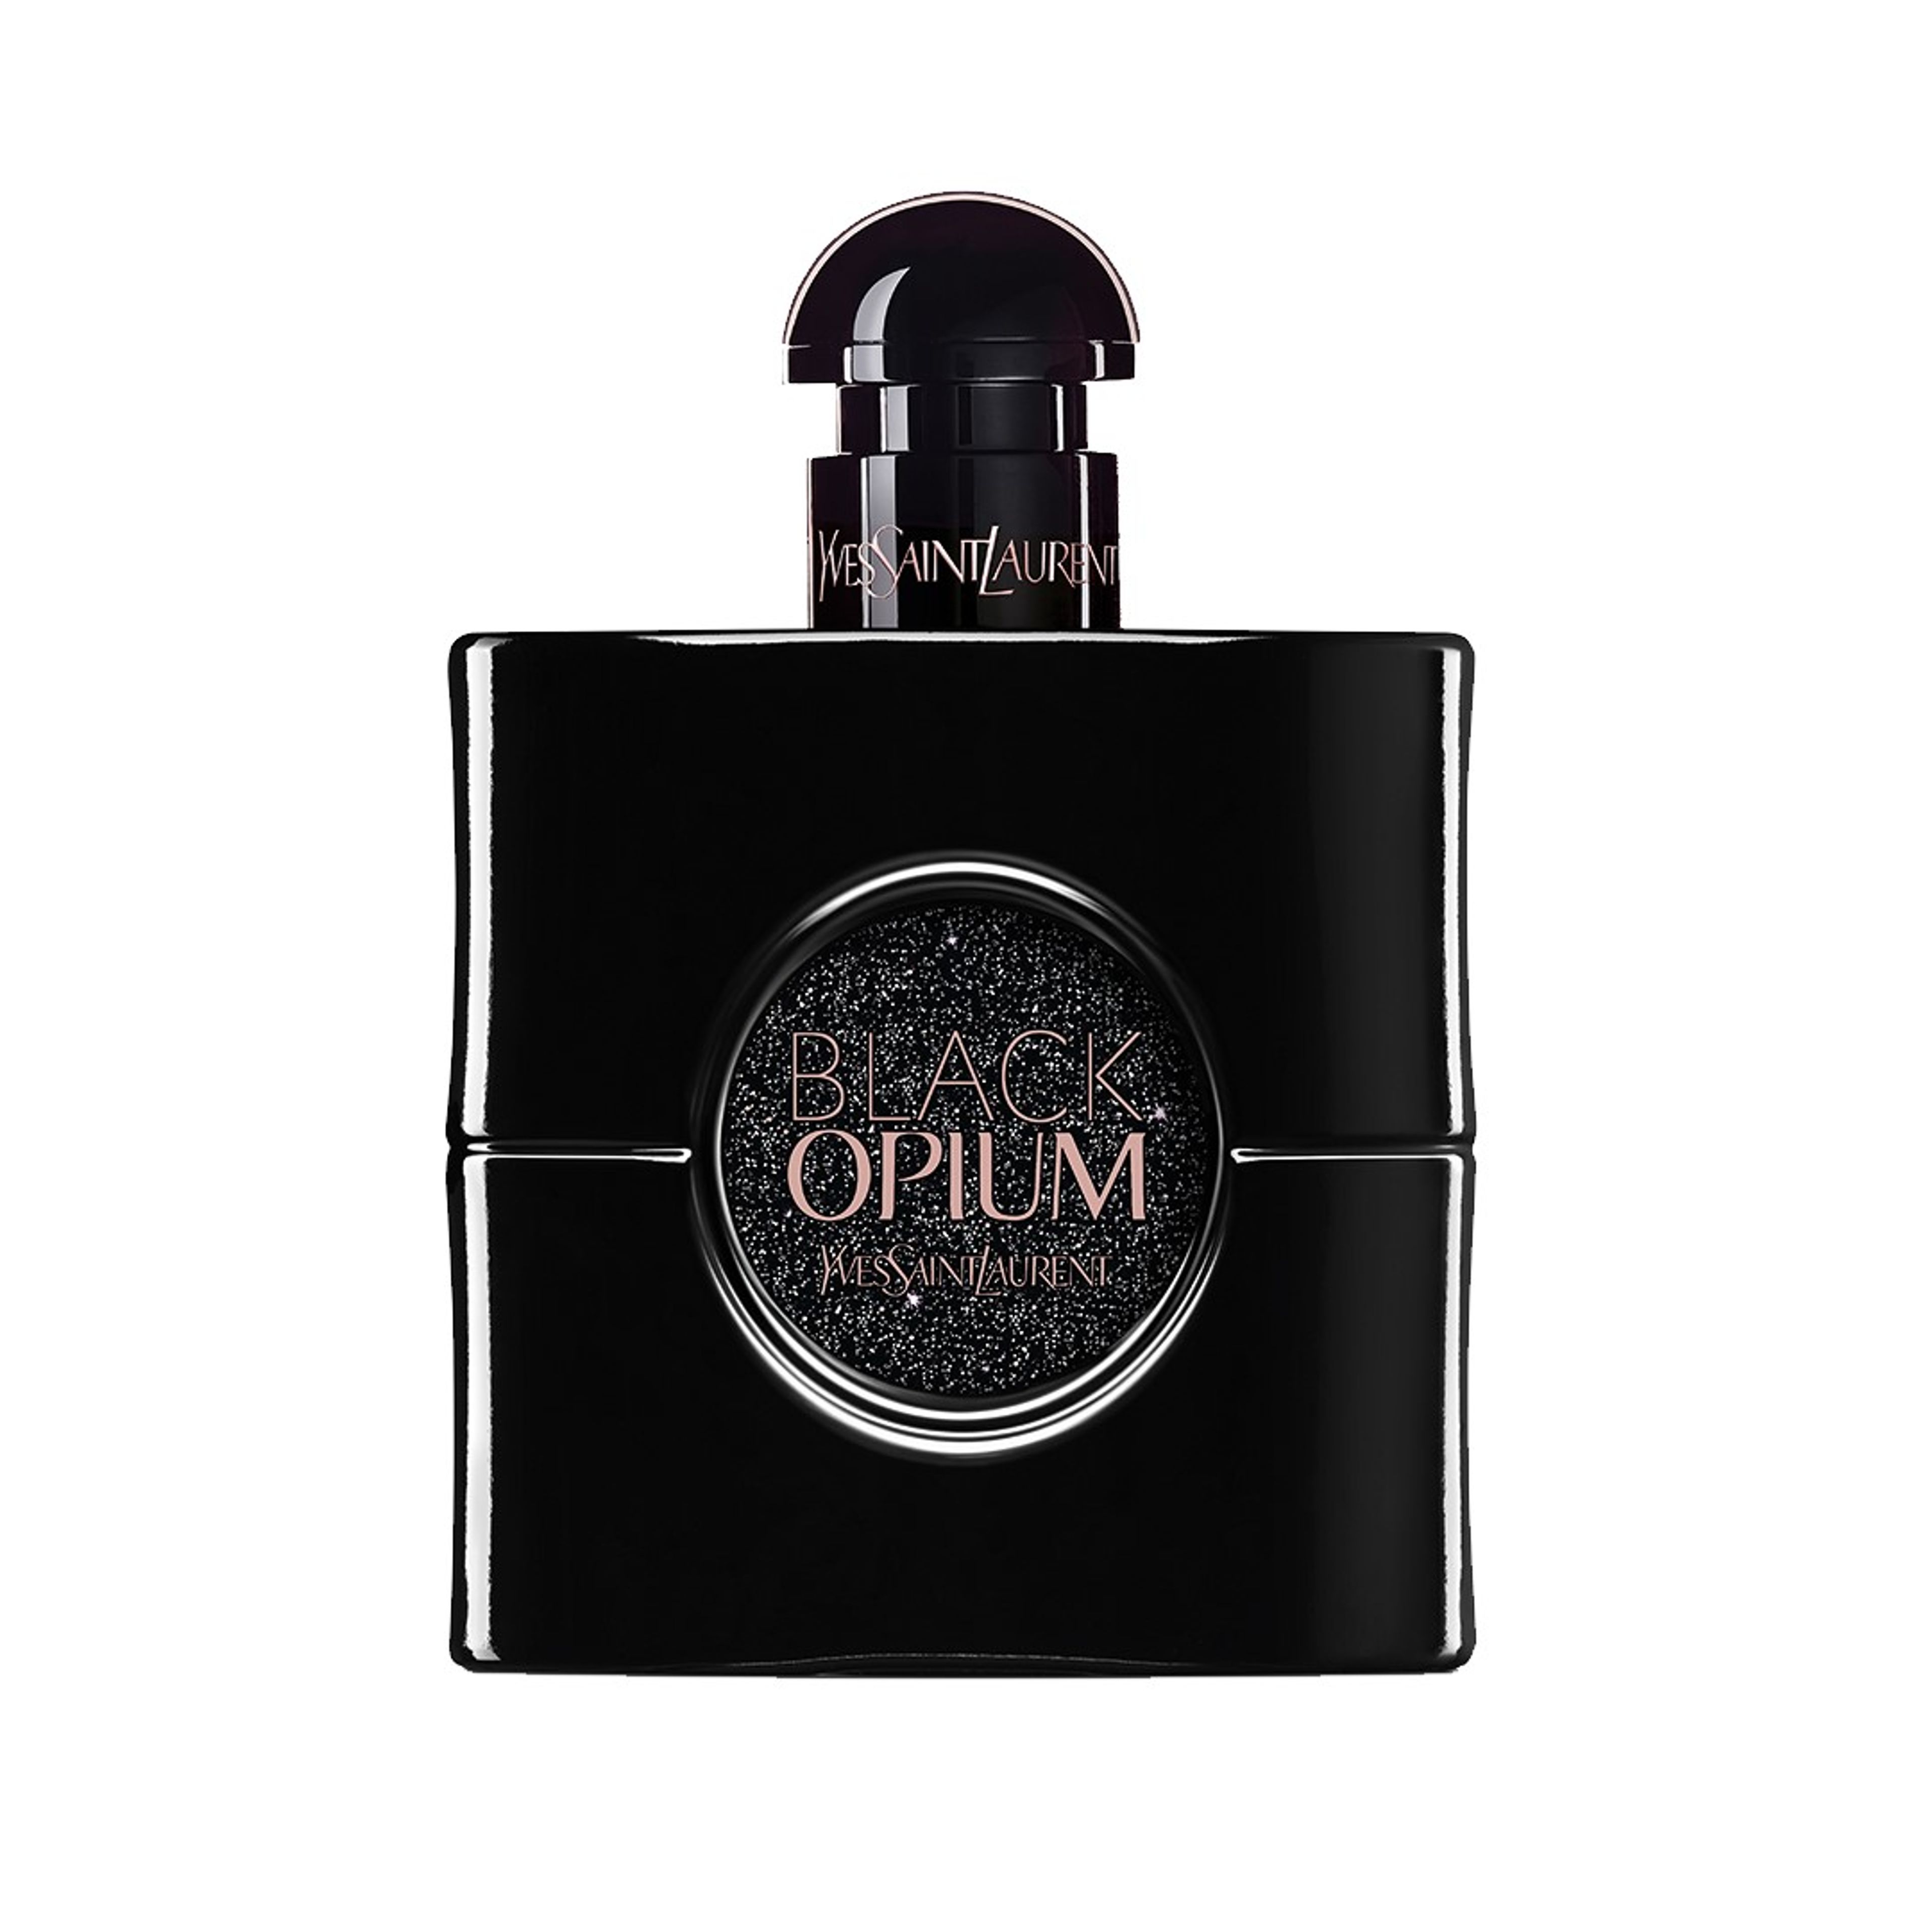 Yves Saint Laurent Ysl Black Opium Le Parfum 1